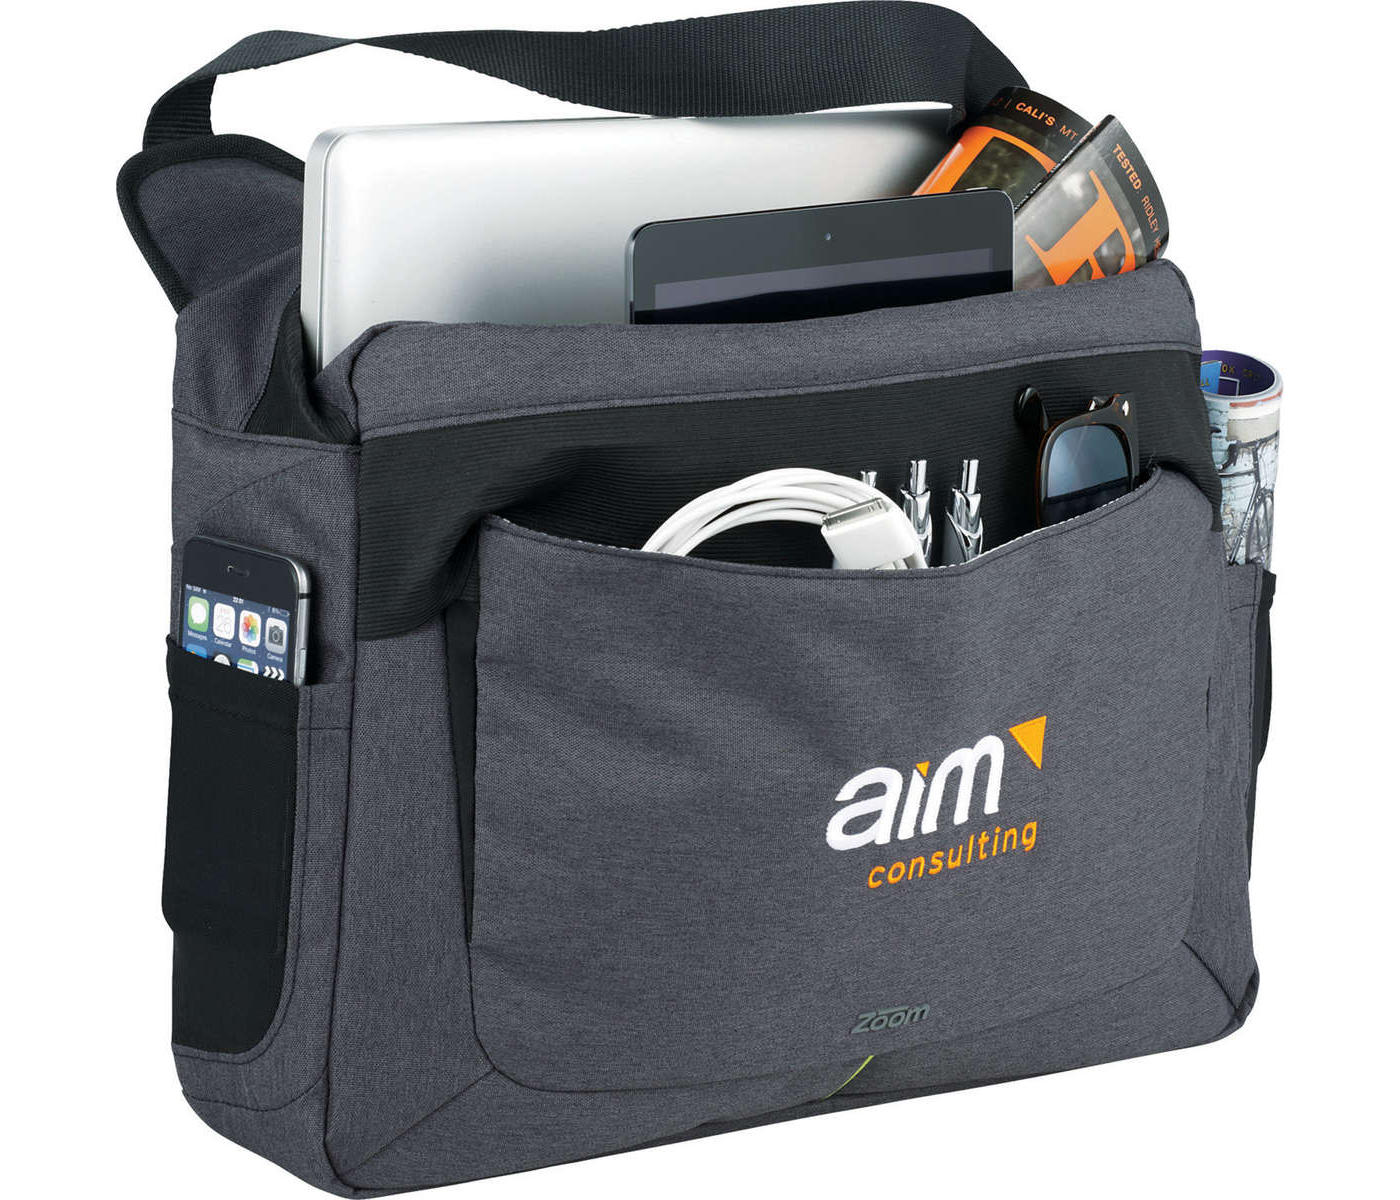 Zoom® Power Stretch 15" Computer Messenger Bag - Gray